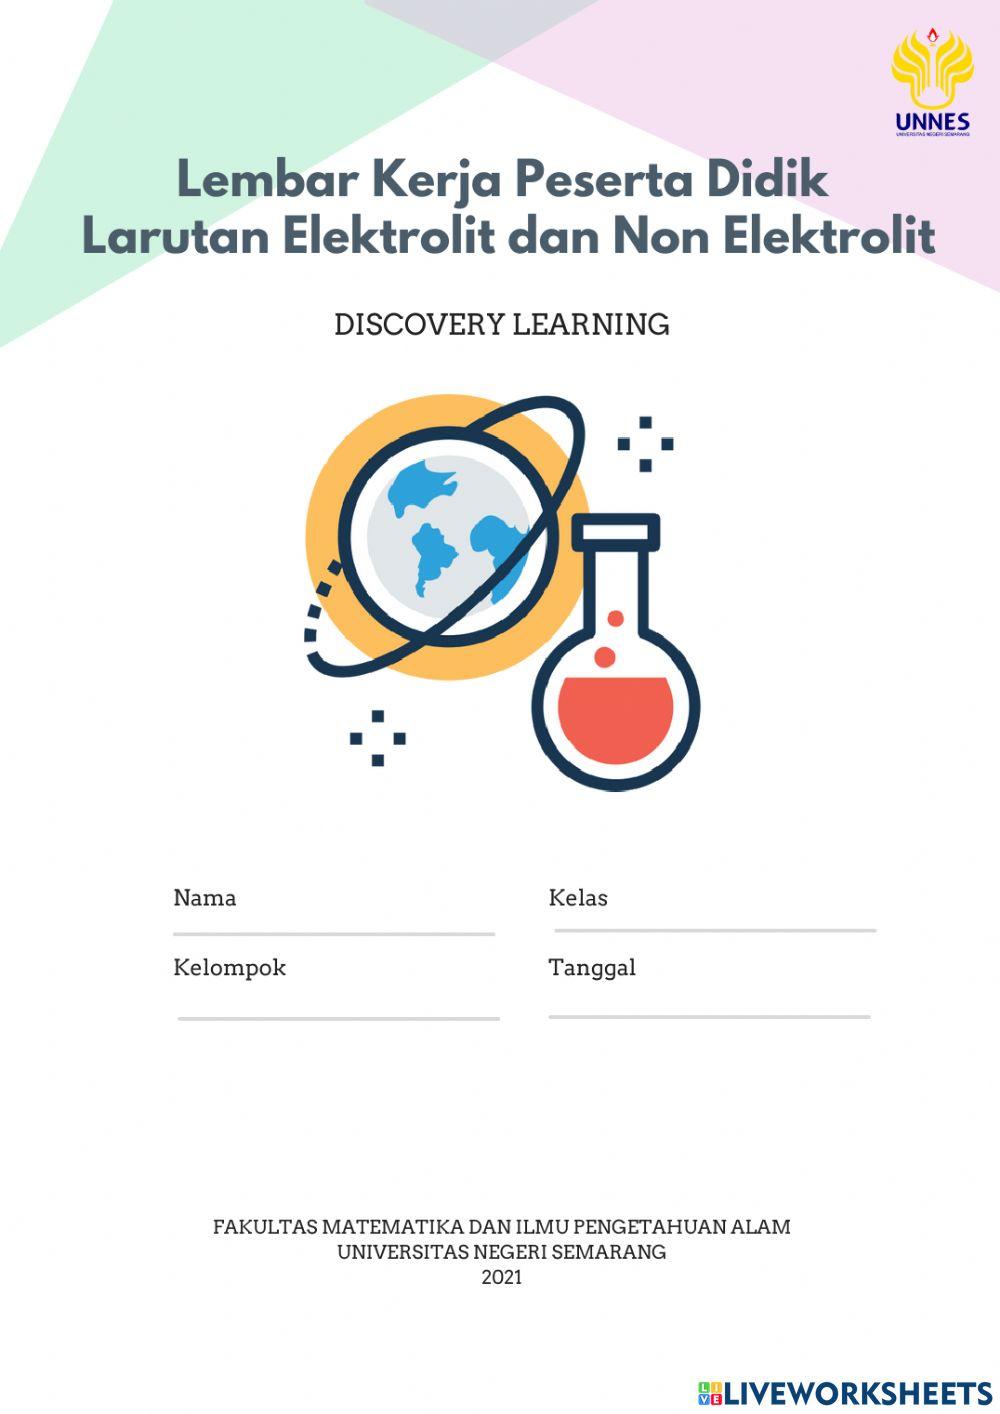 LKPD Larutan Elektrolit dan Non Elektrolit.